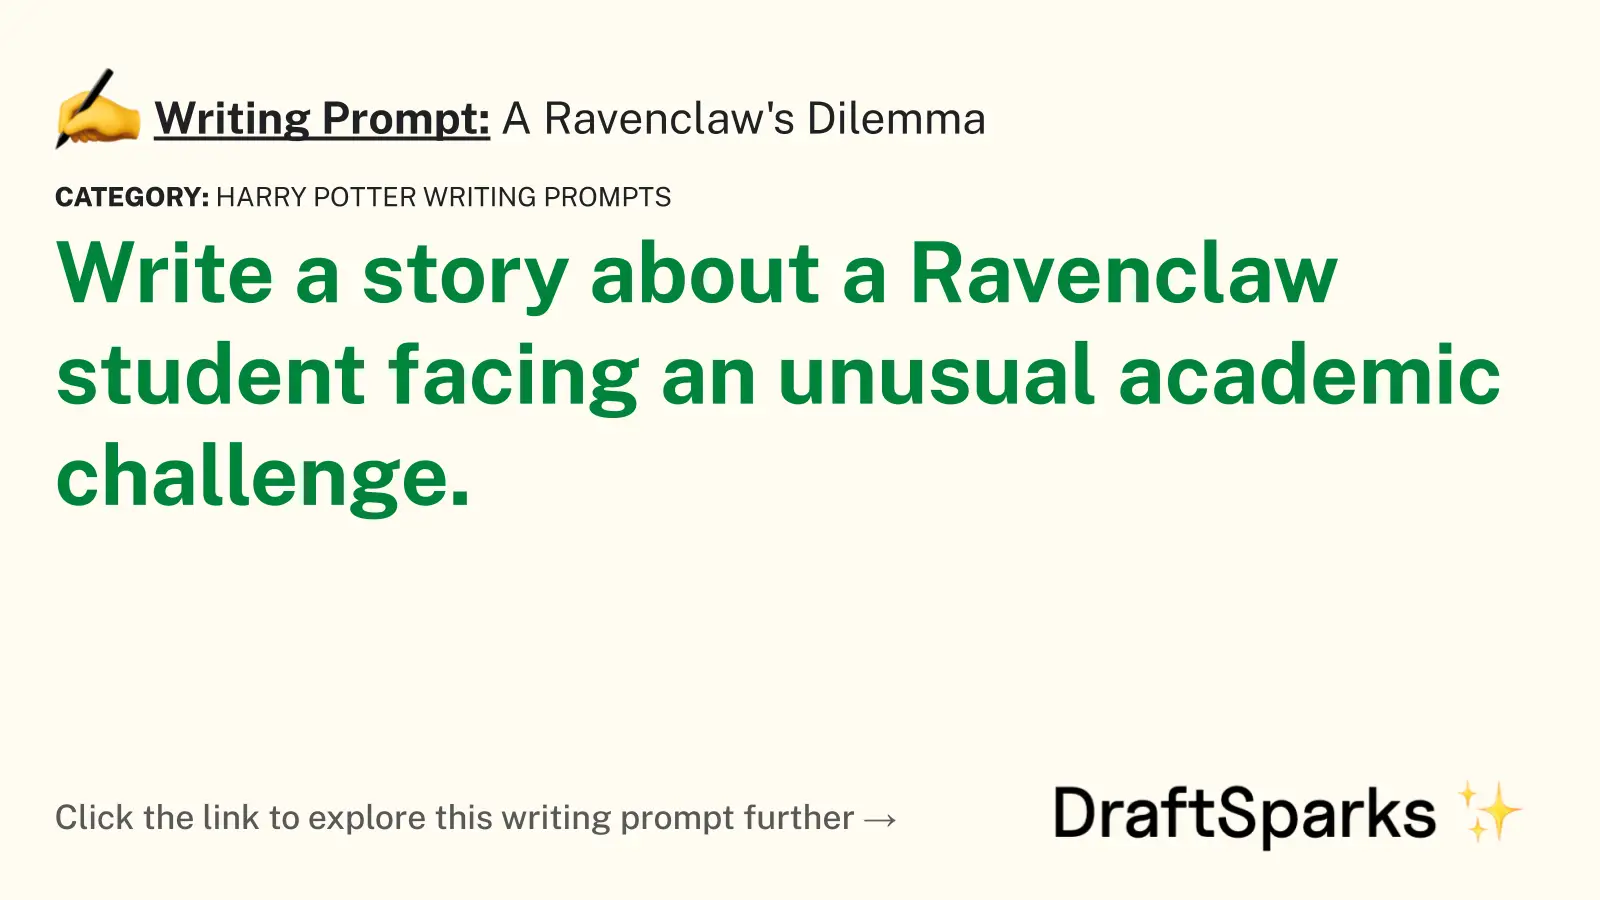 A Ravenclaw’s Dilemma